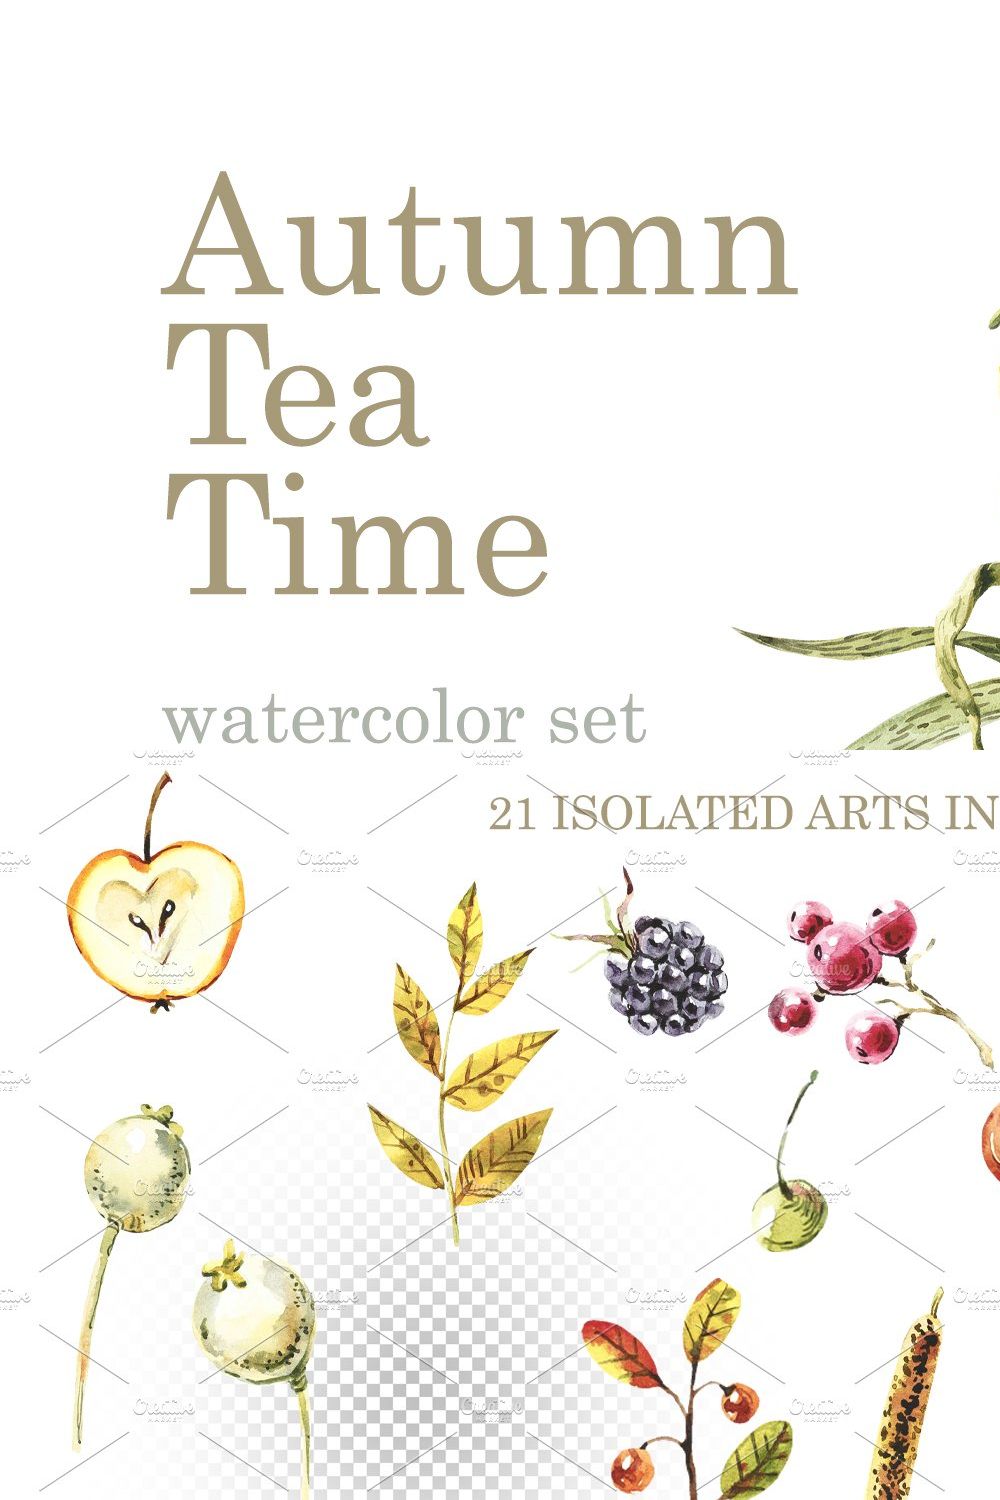 Autumn Tea Time pinterest preview image.